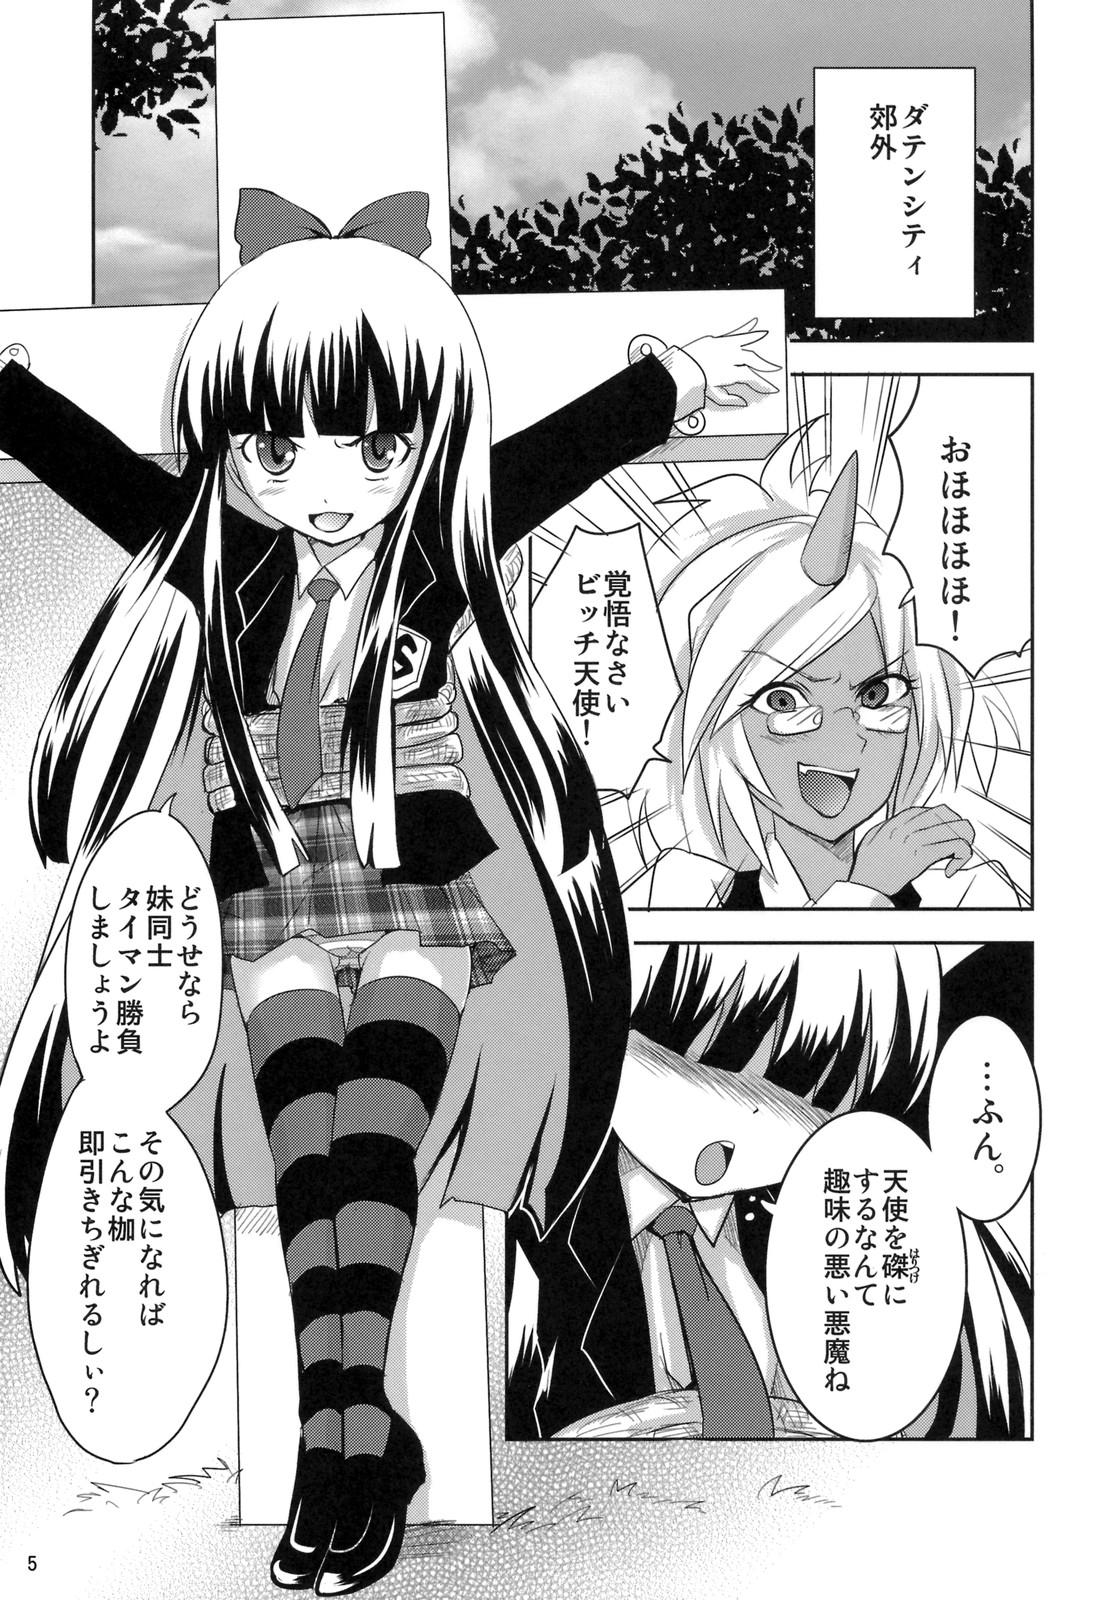 Spanking Tenshi ga Love Kick wo - Panty and stocking with garterbelt Huge - Page 4